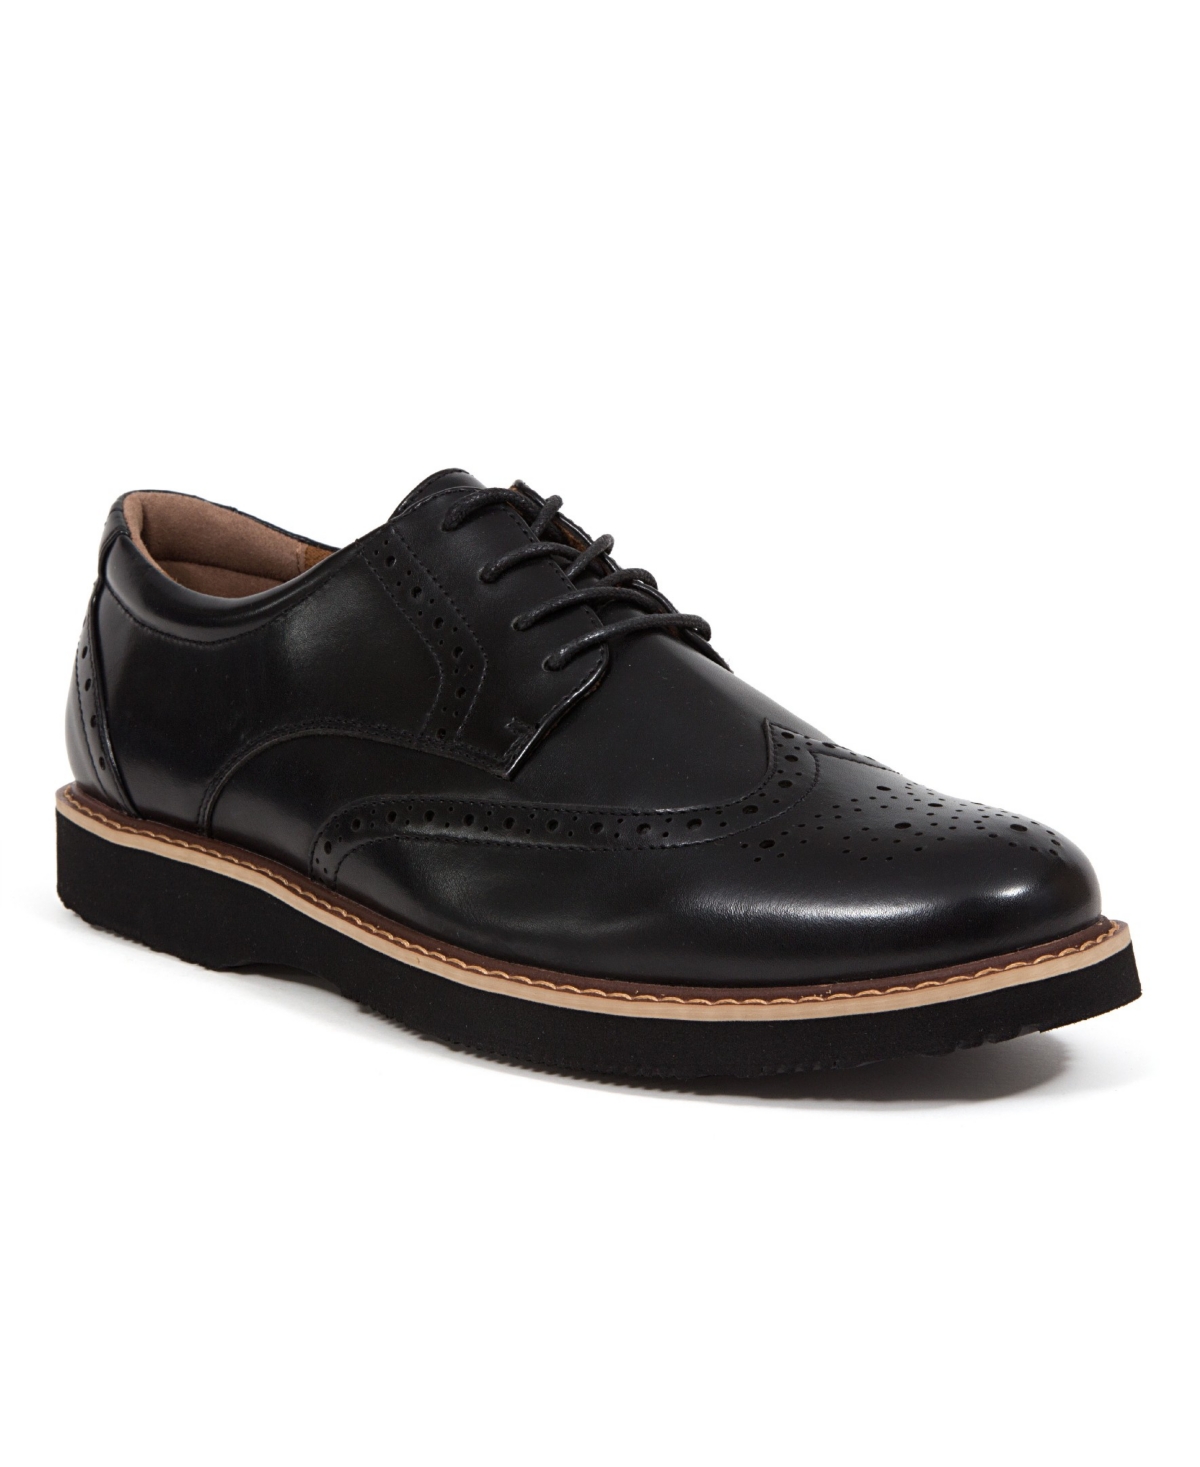 Men's Walkmaster Wingtip Oxford1 S.u.p.r.o 2.0 Classic Comfort Oxford Shoes - Black